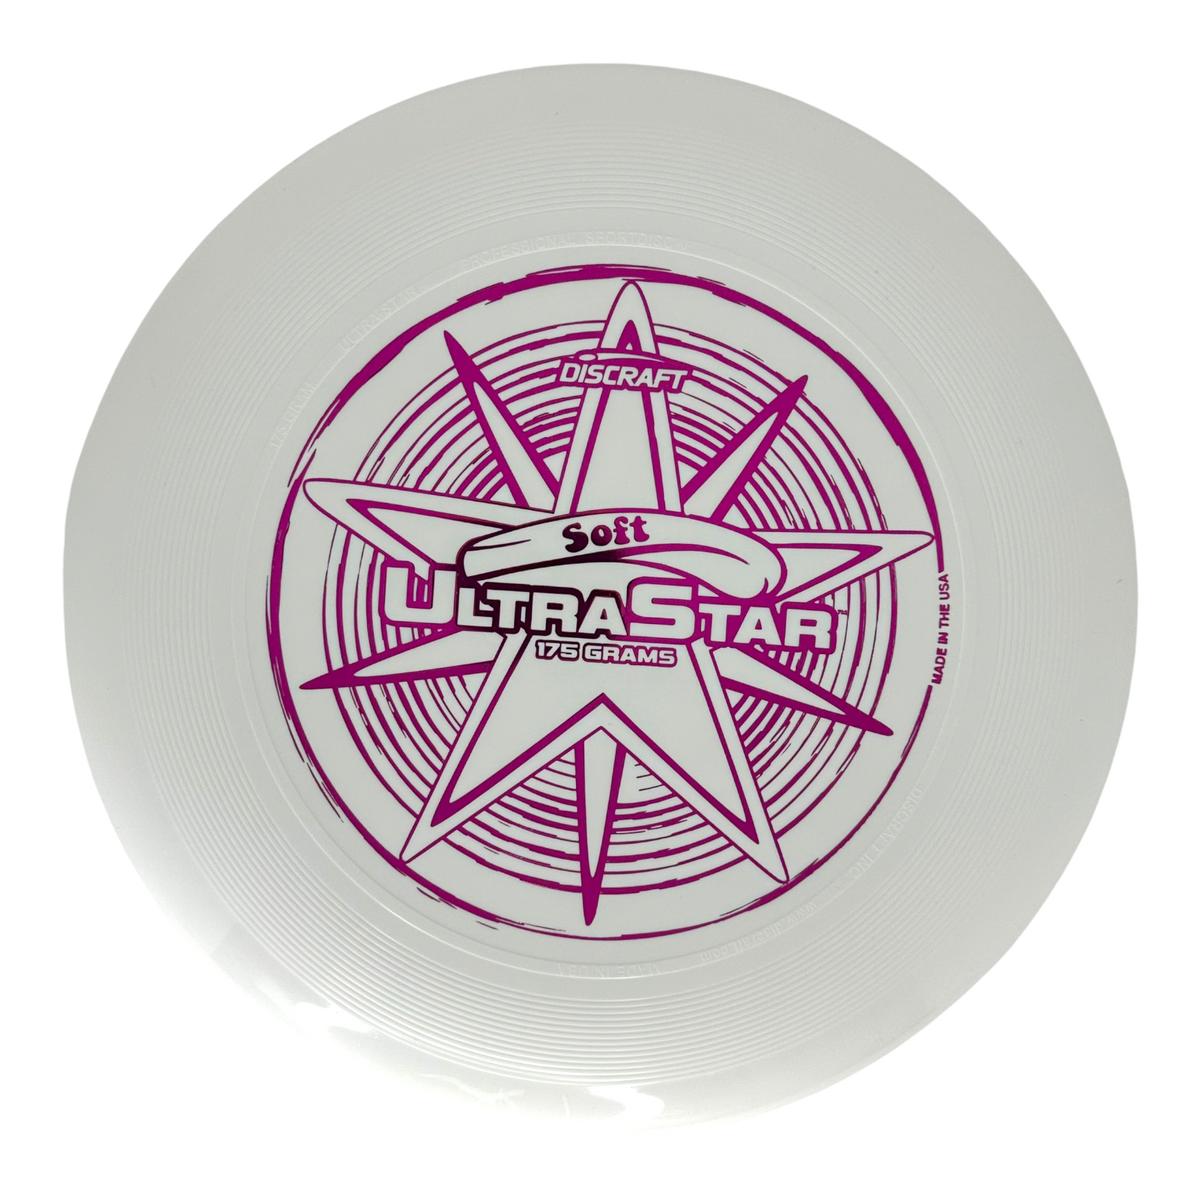 Discraft Soft Ultrastar